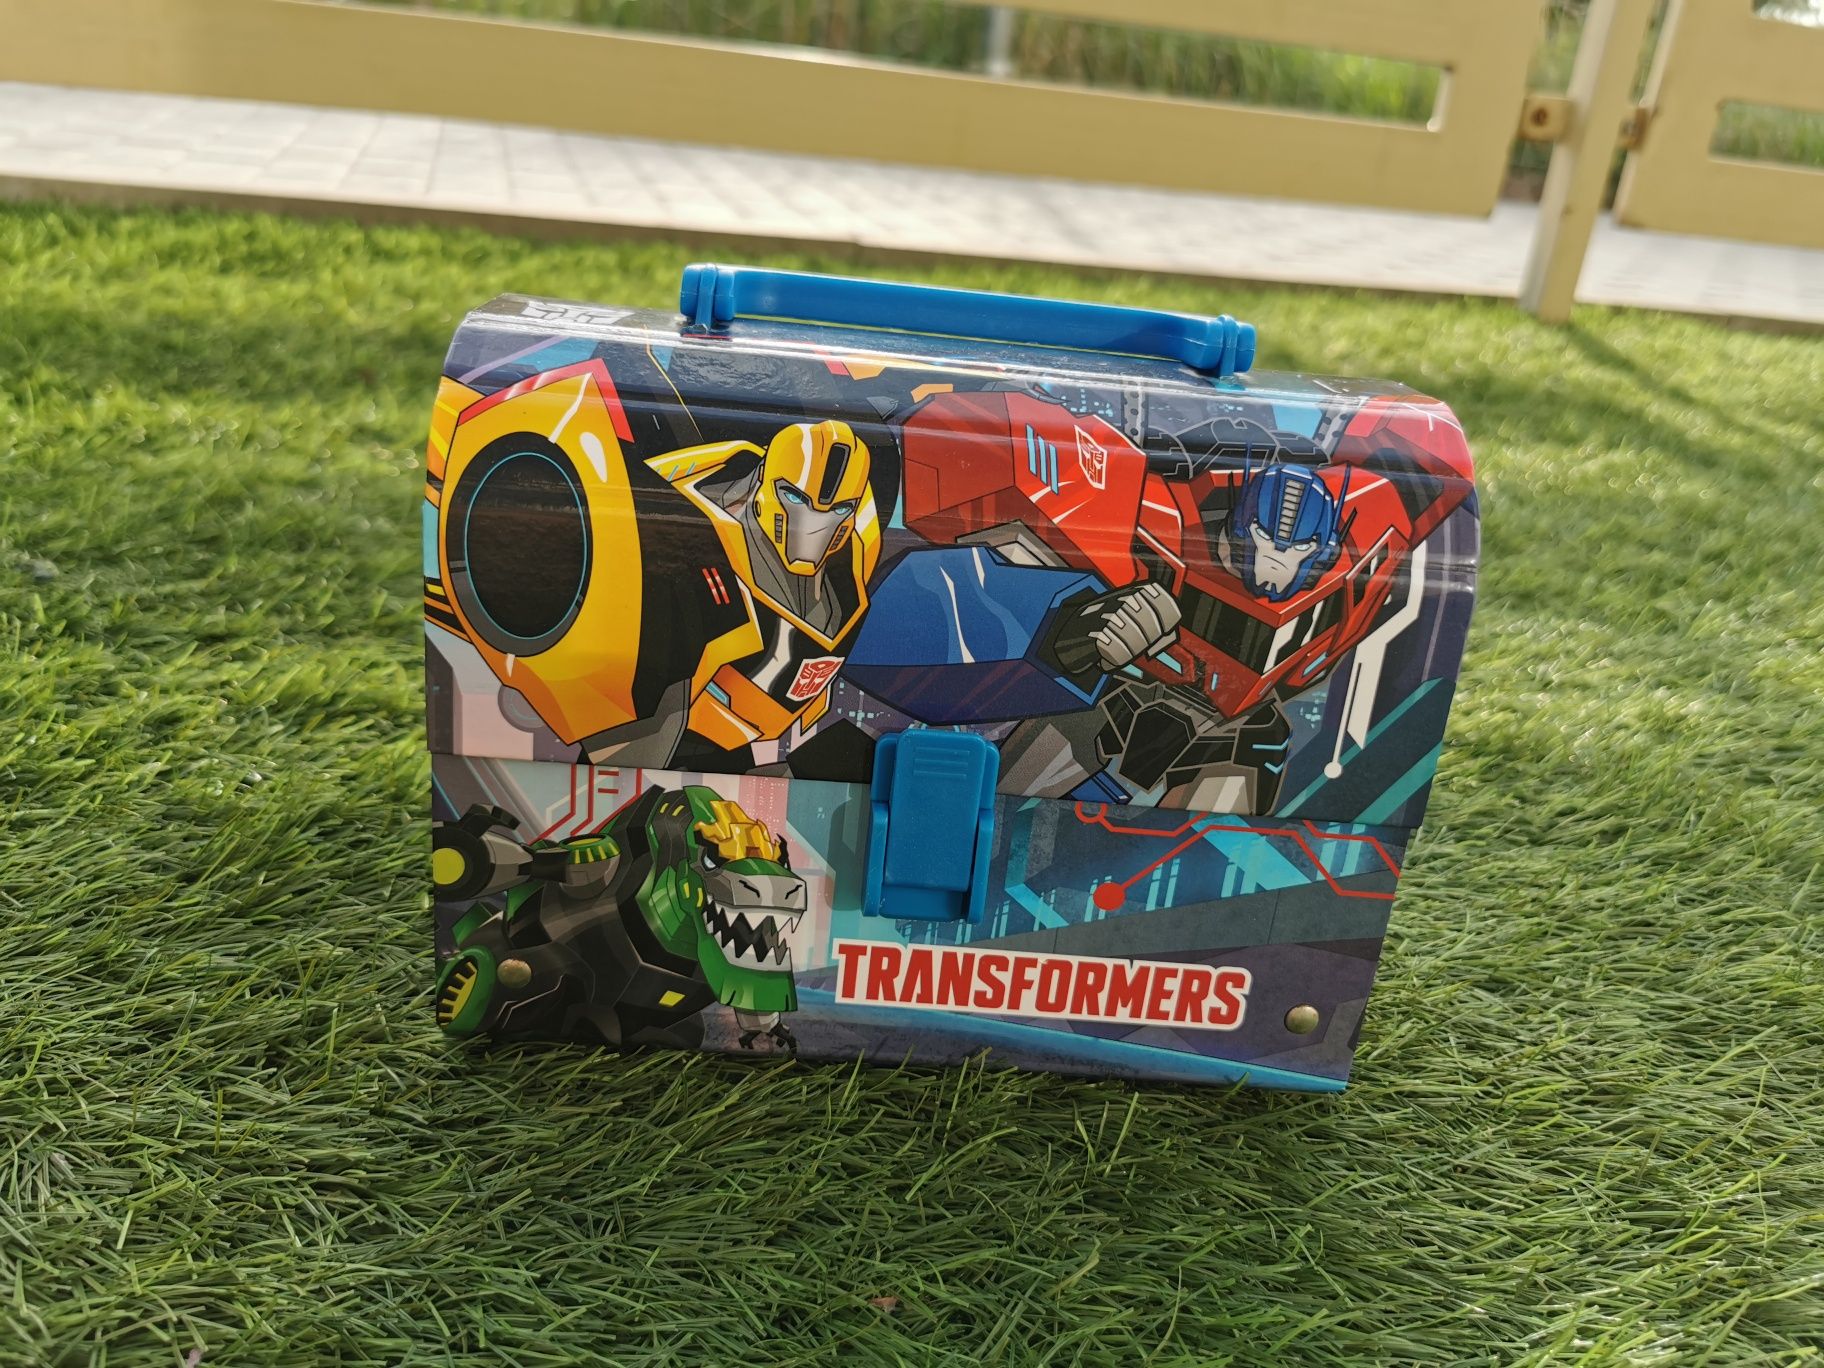 Kuferek Transformers Transformersi teczka torebka